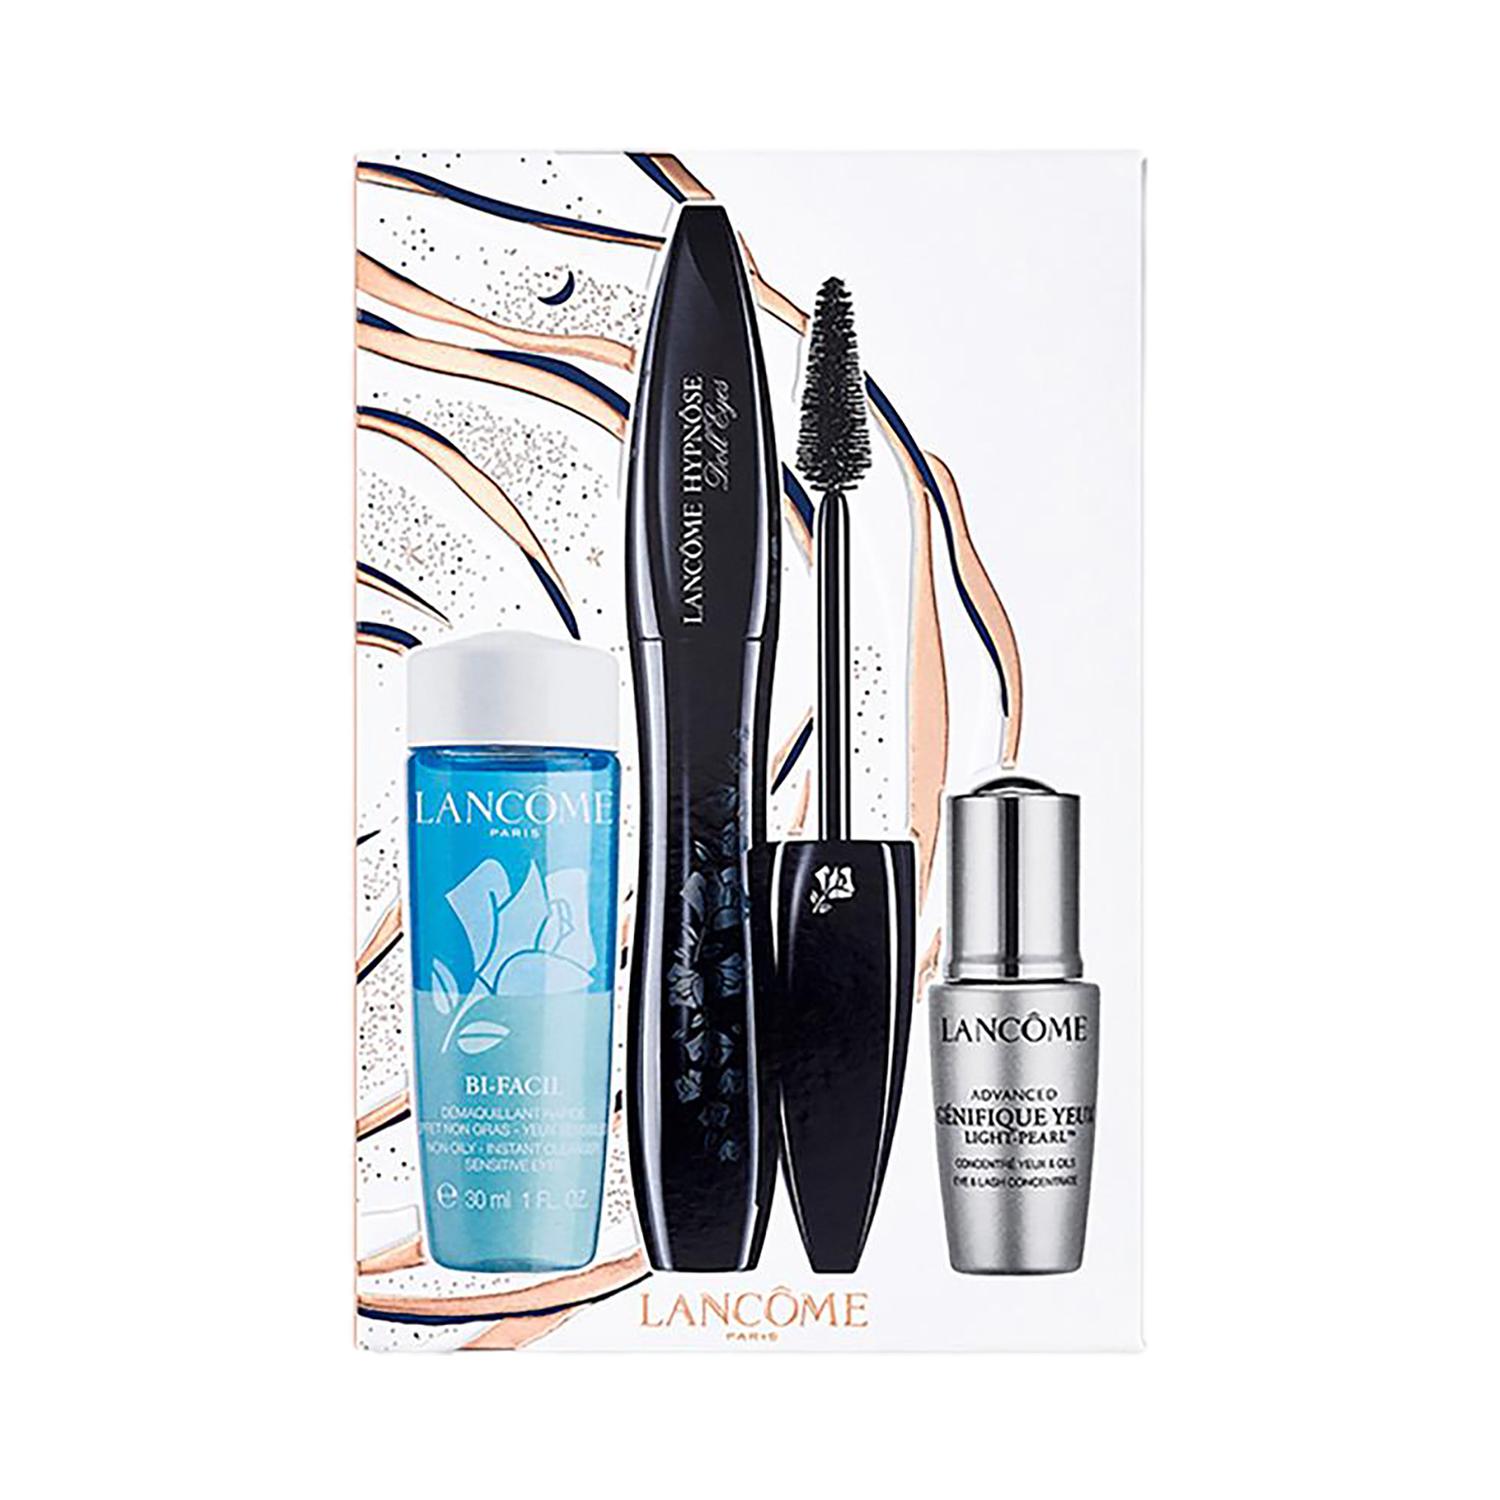 Lancome | Lancome Hypnose Mascara Limited Edition Gift Set - (3 Pcs)